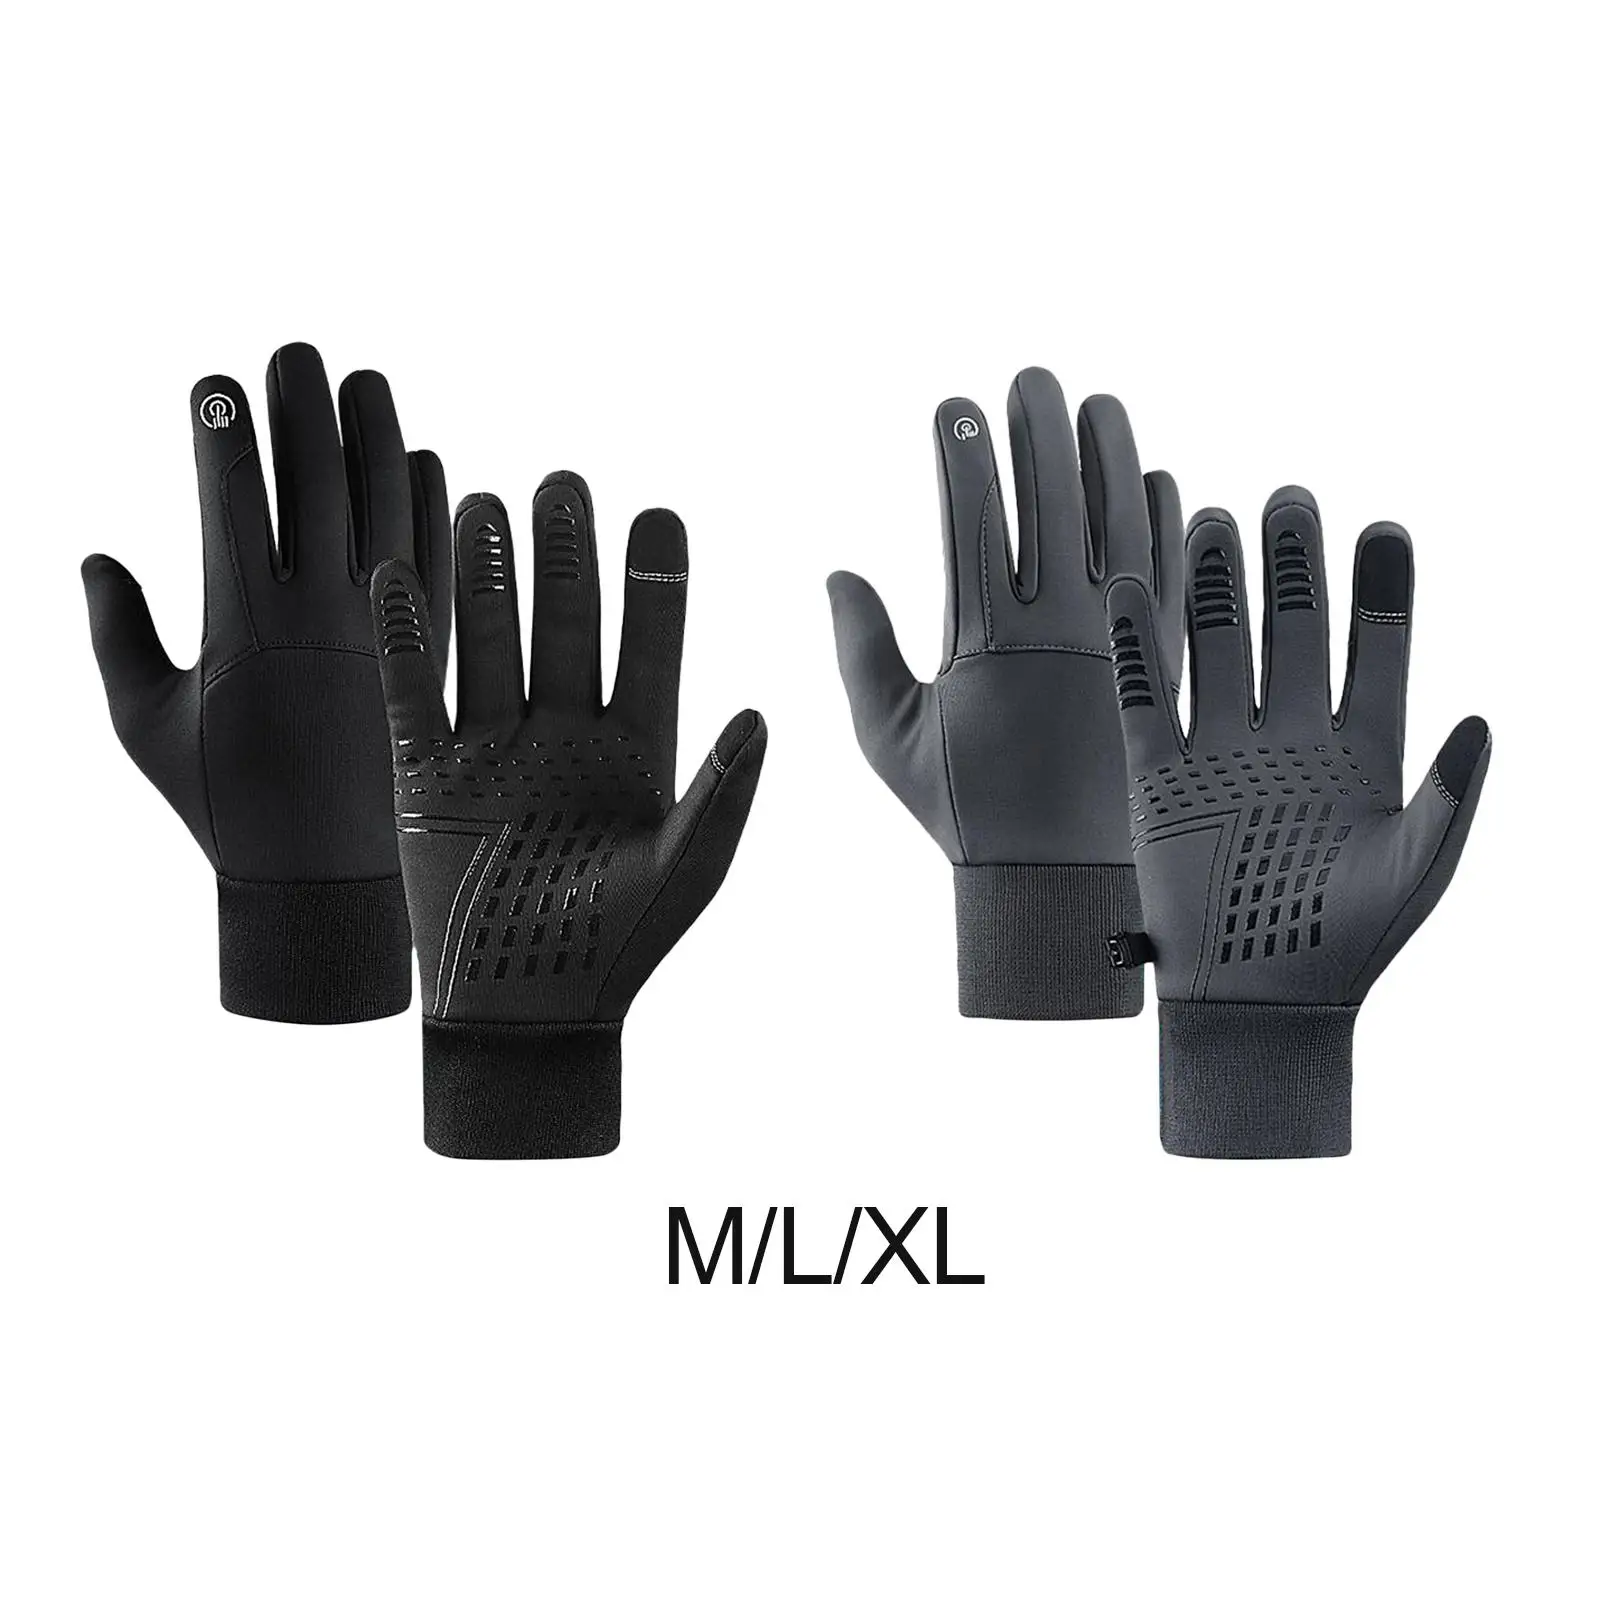 Men Winter Touch Screen Anti Slip Palm Full Finger Black Comfortable Waterproof Warm Mittens for Skating Biking Outdoor